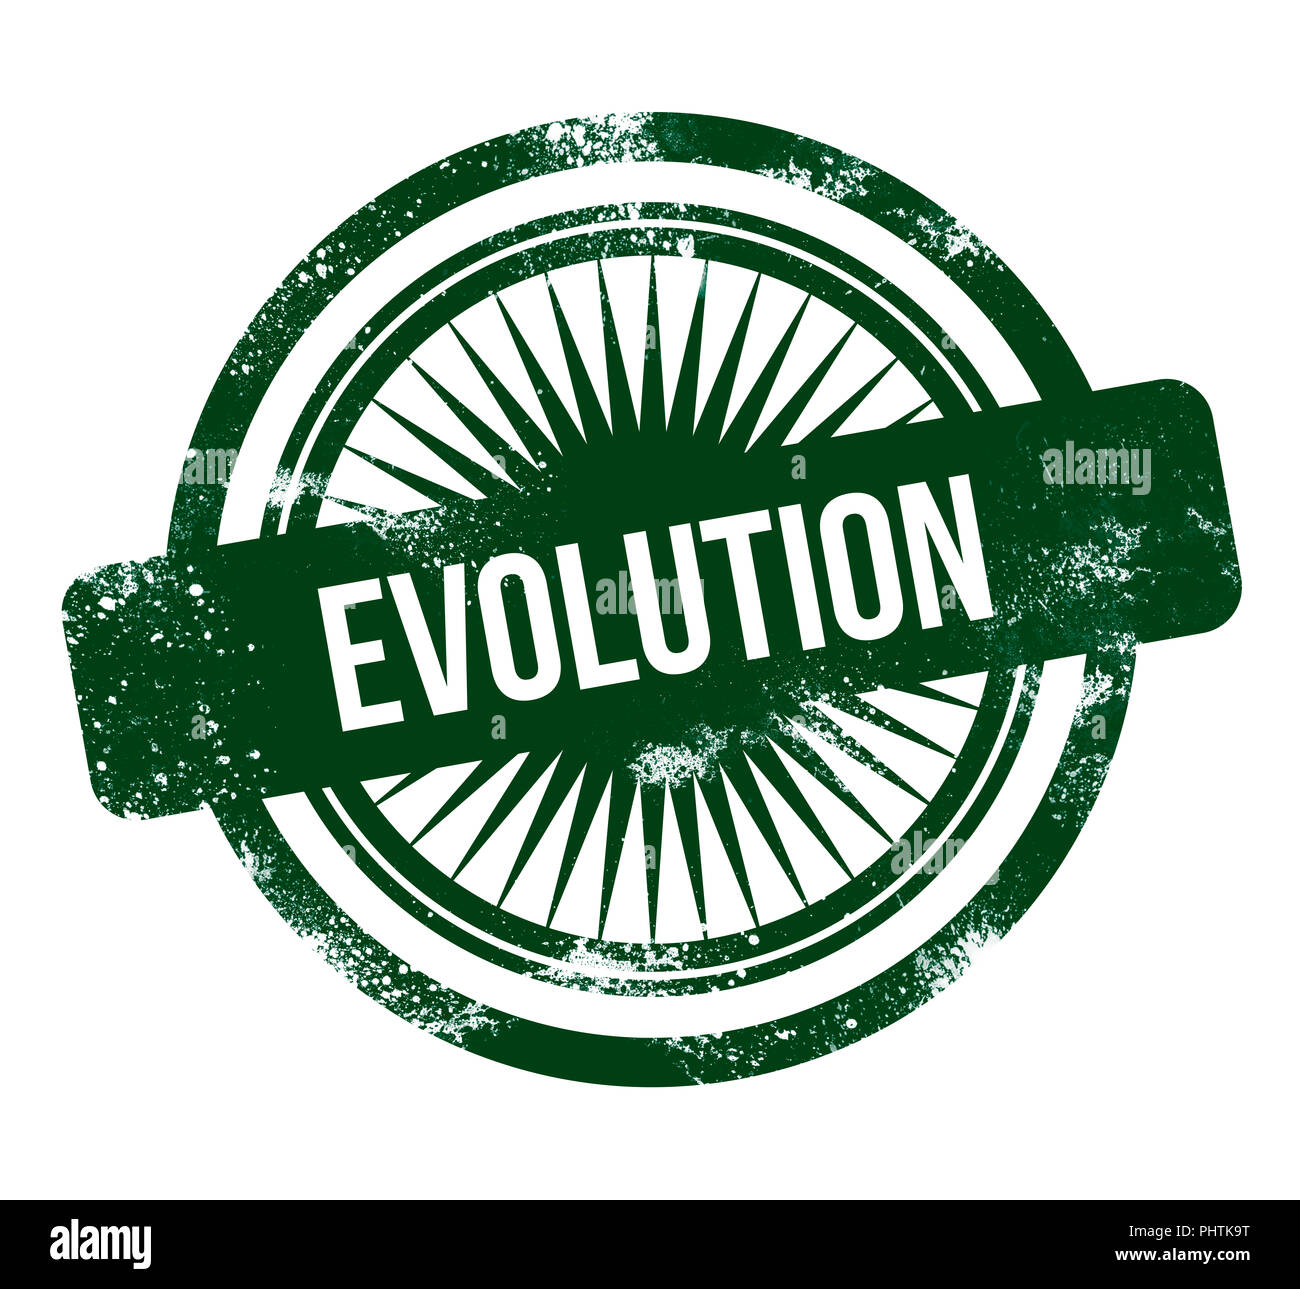 Evolution - green grunge stamp Stock Photo